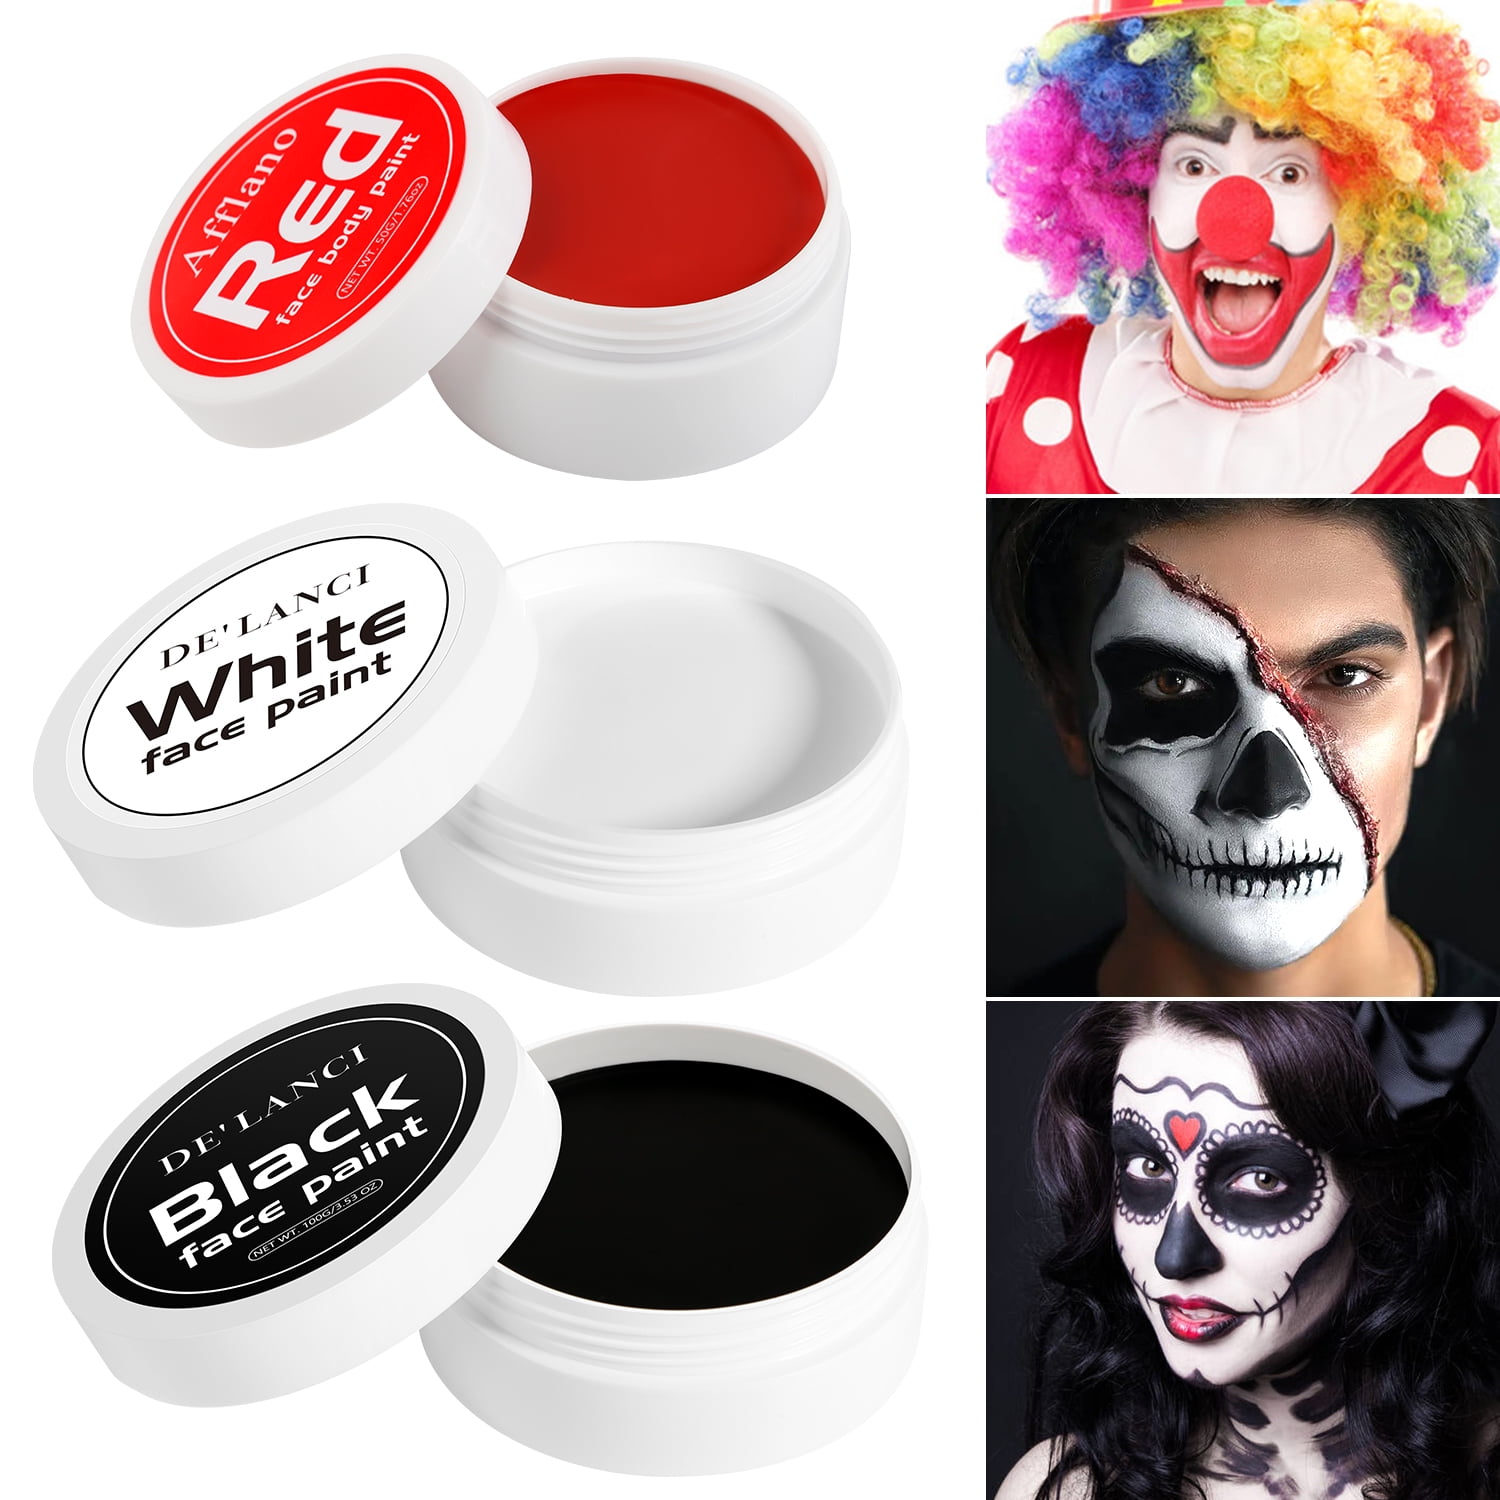 Best 1 Oz Black Face and Body Paint Stick